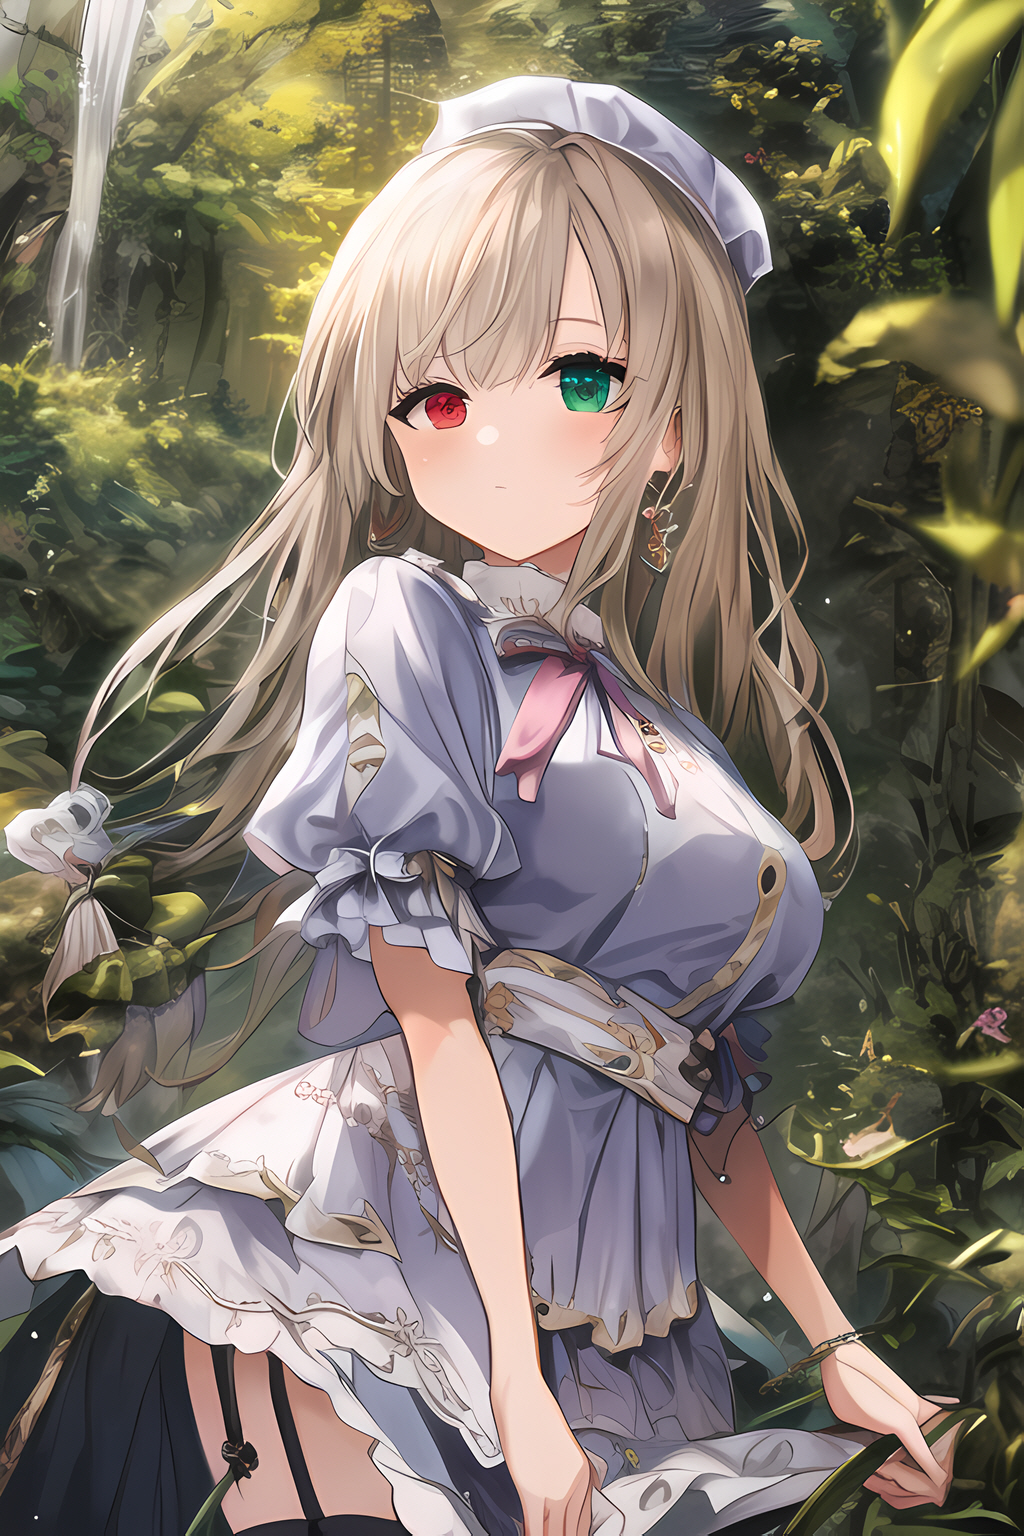 Beautiful Anime kawaii cute fantasy maid Girl by SianWorld on